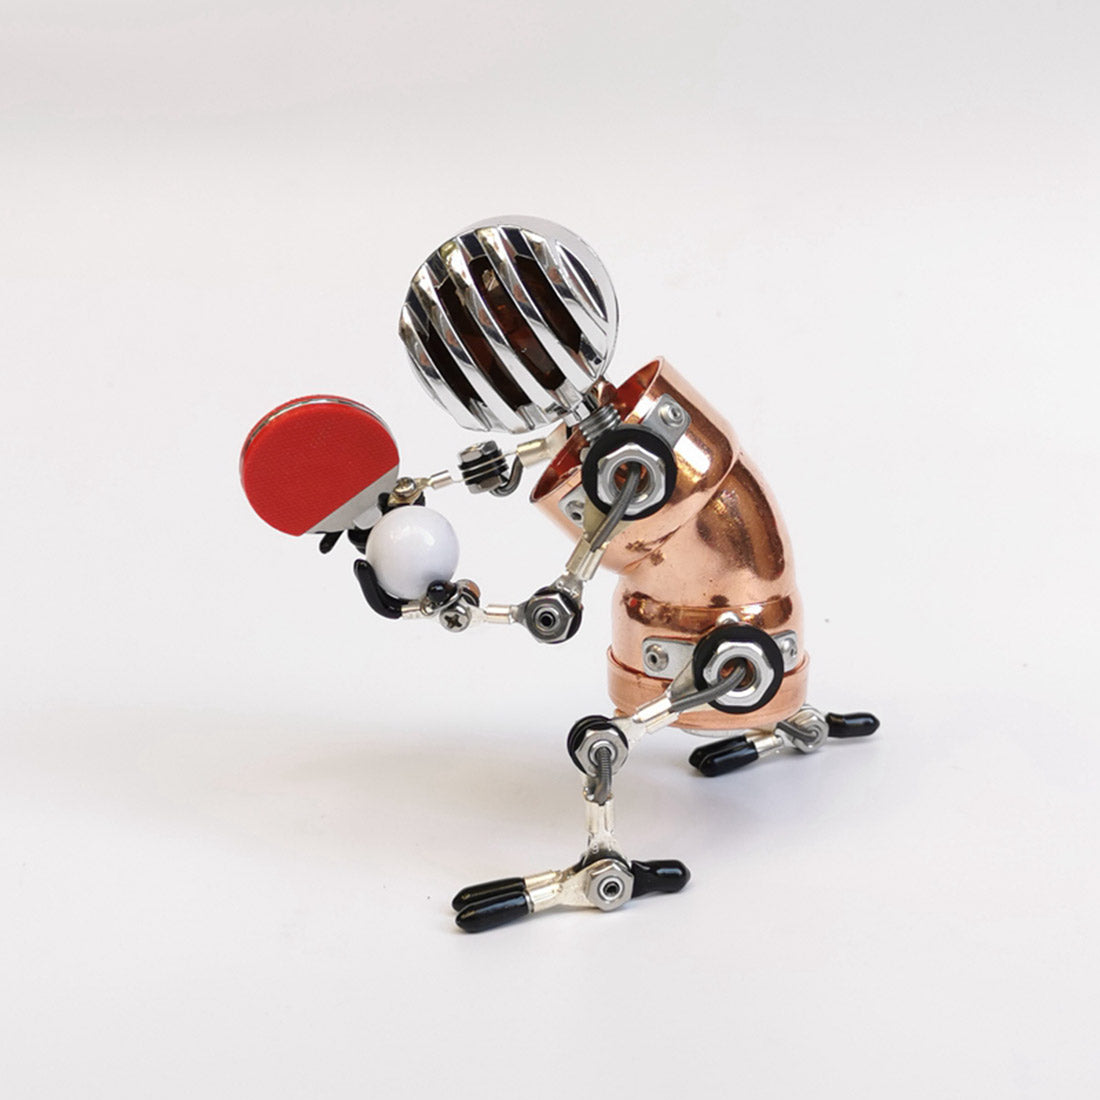 Steampunk Metal Model Robot Table Tennis Player David Night Light Edition